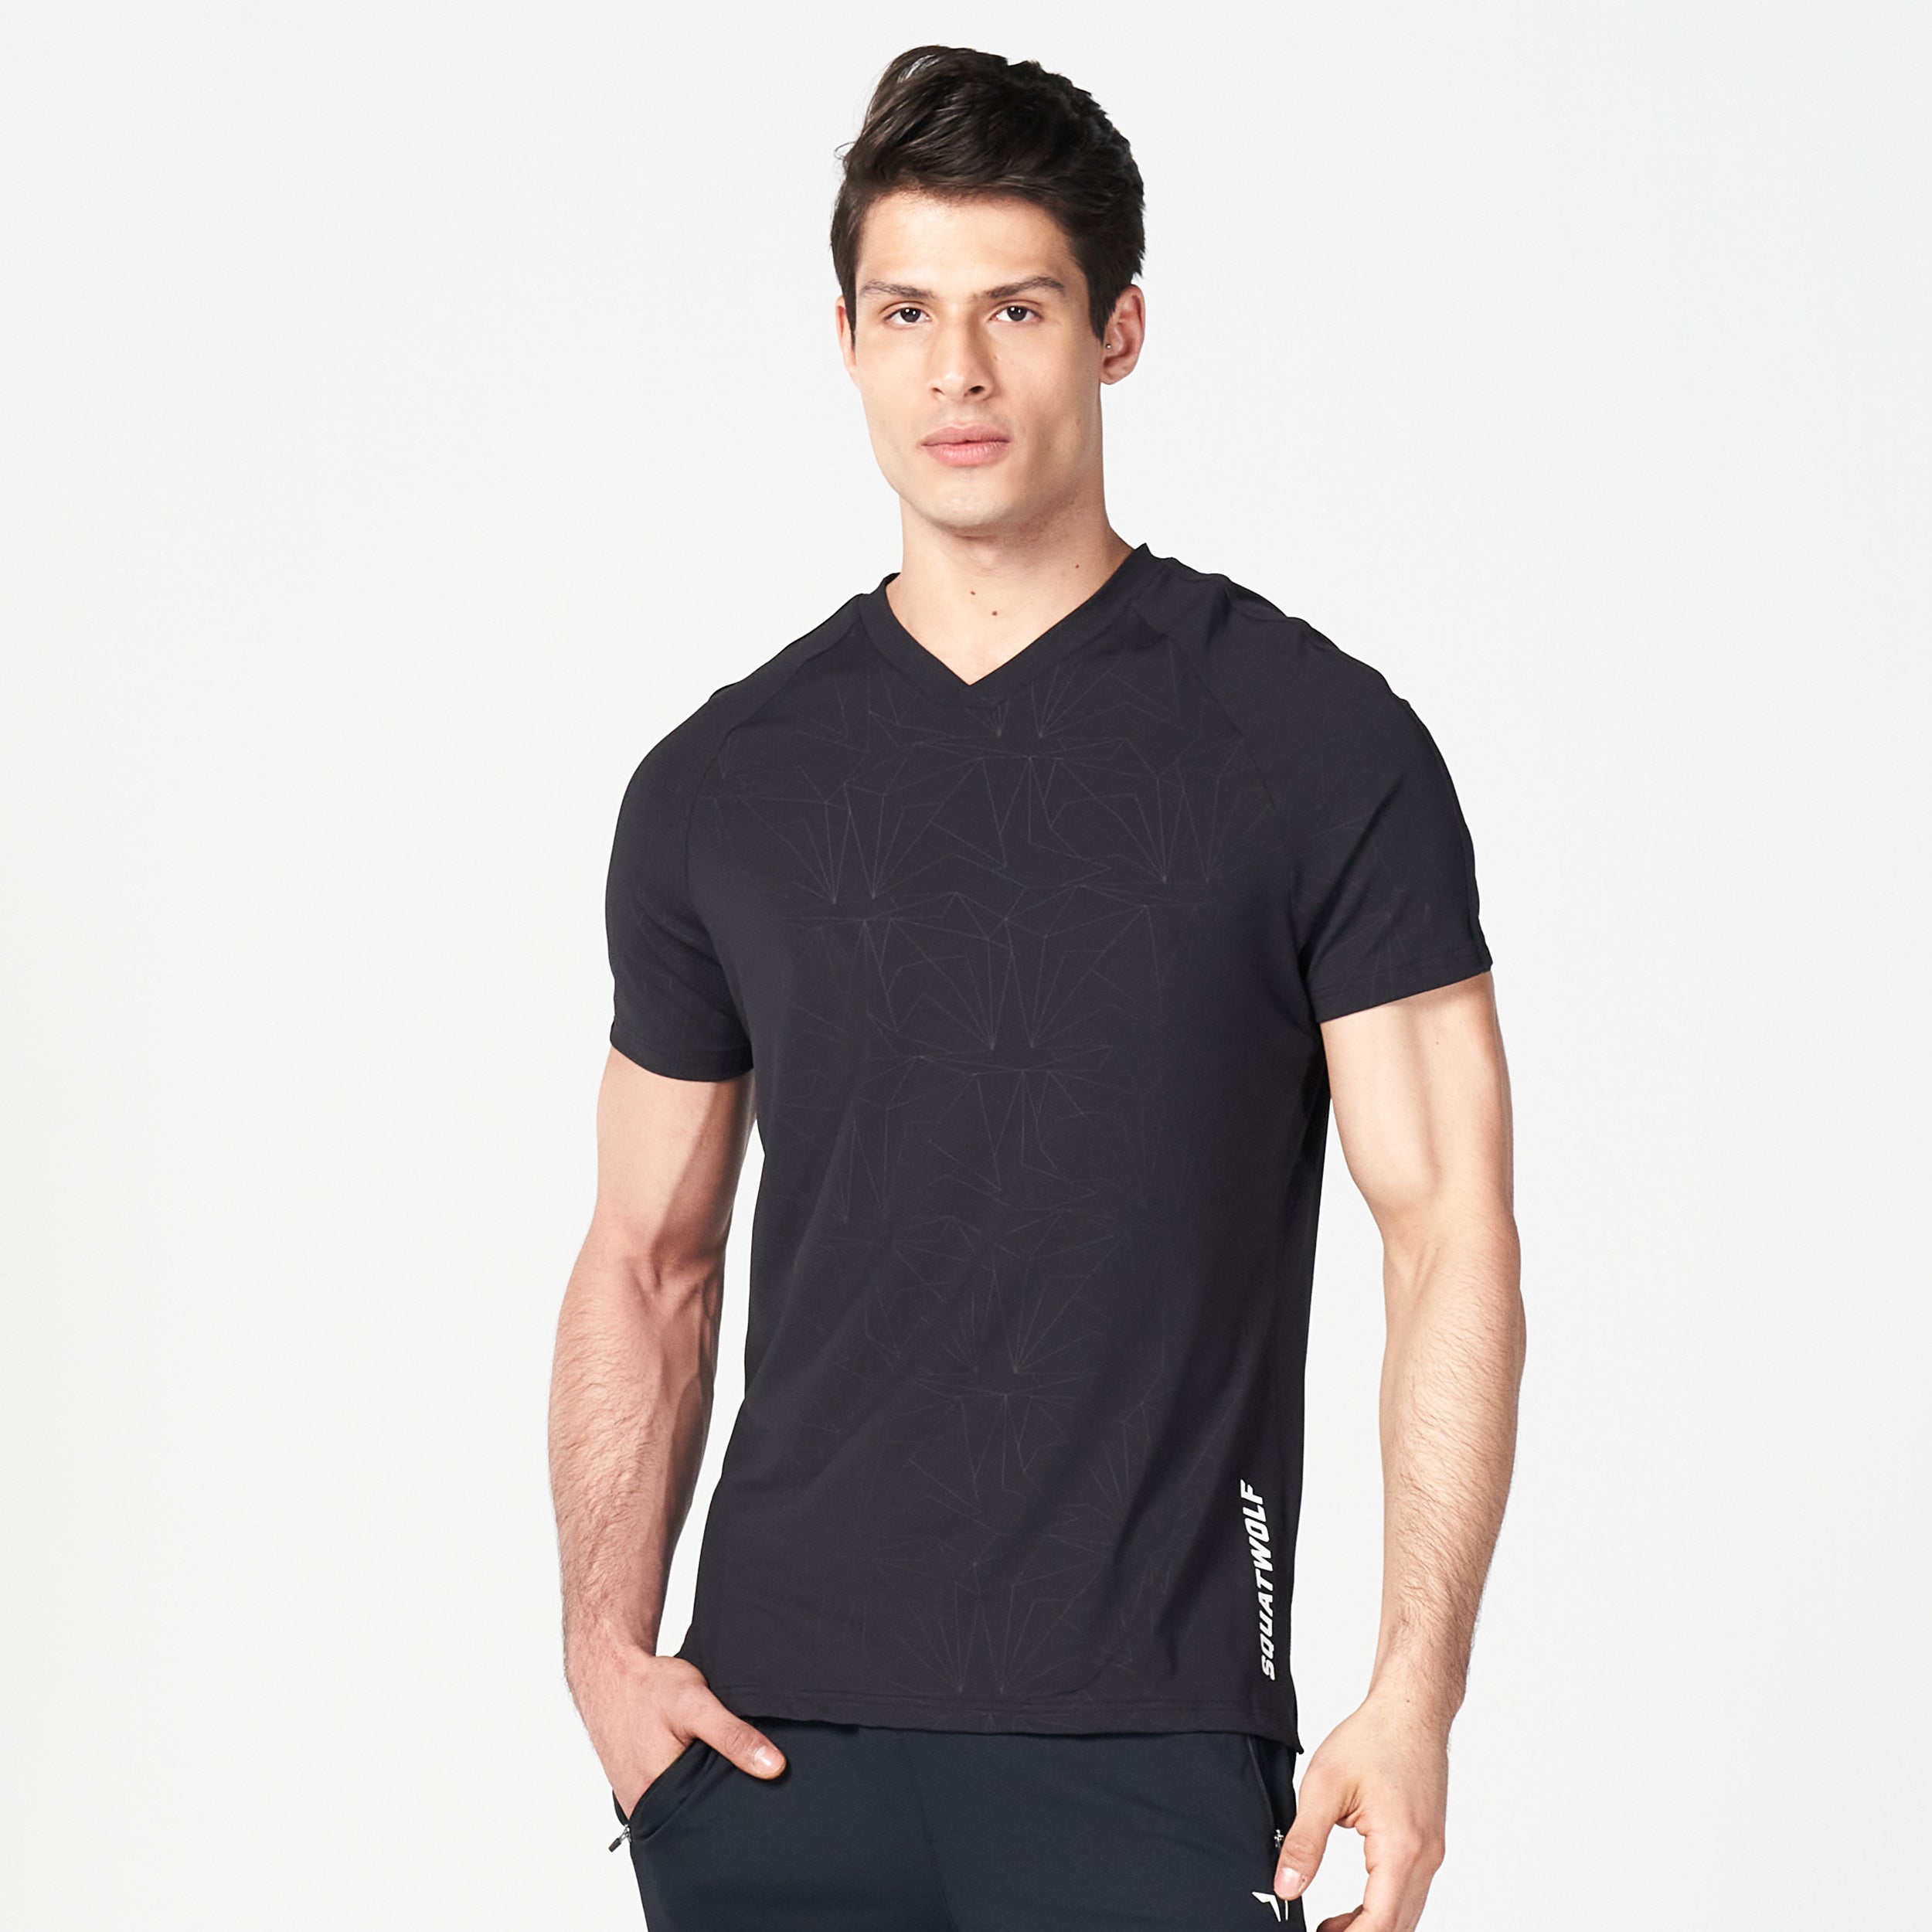 AE | Core V-neck AeroTech Tee - Black | Gym T-Shirts Men | SQUATWOLF